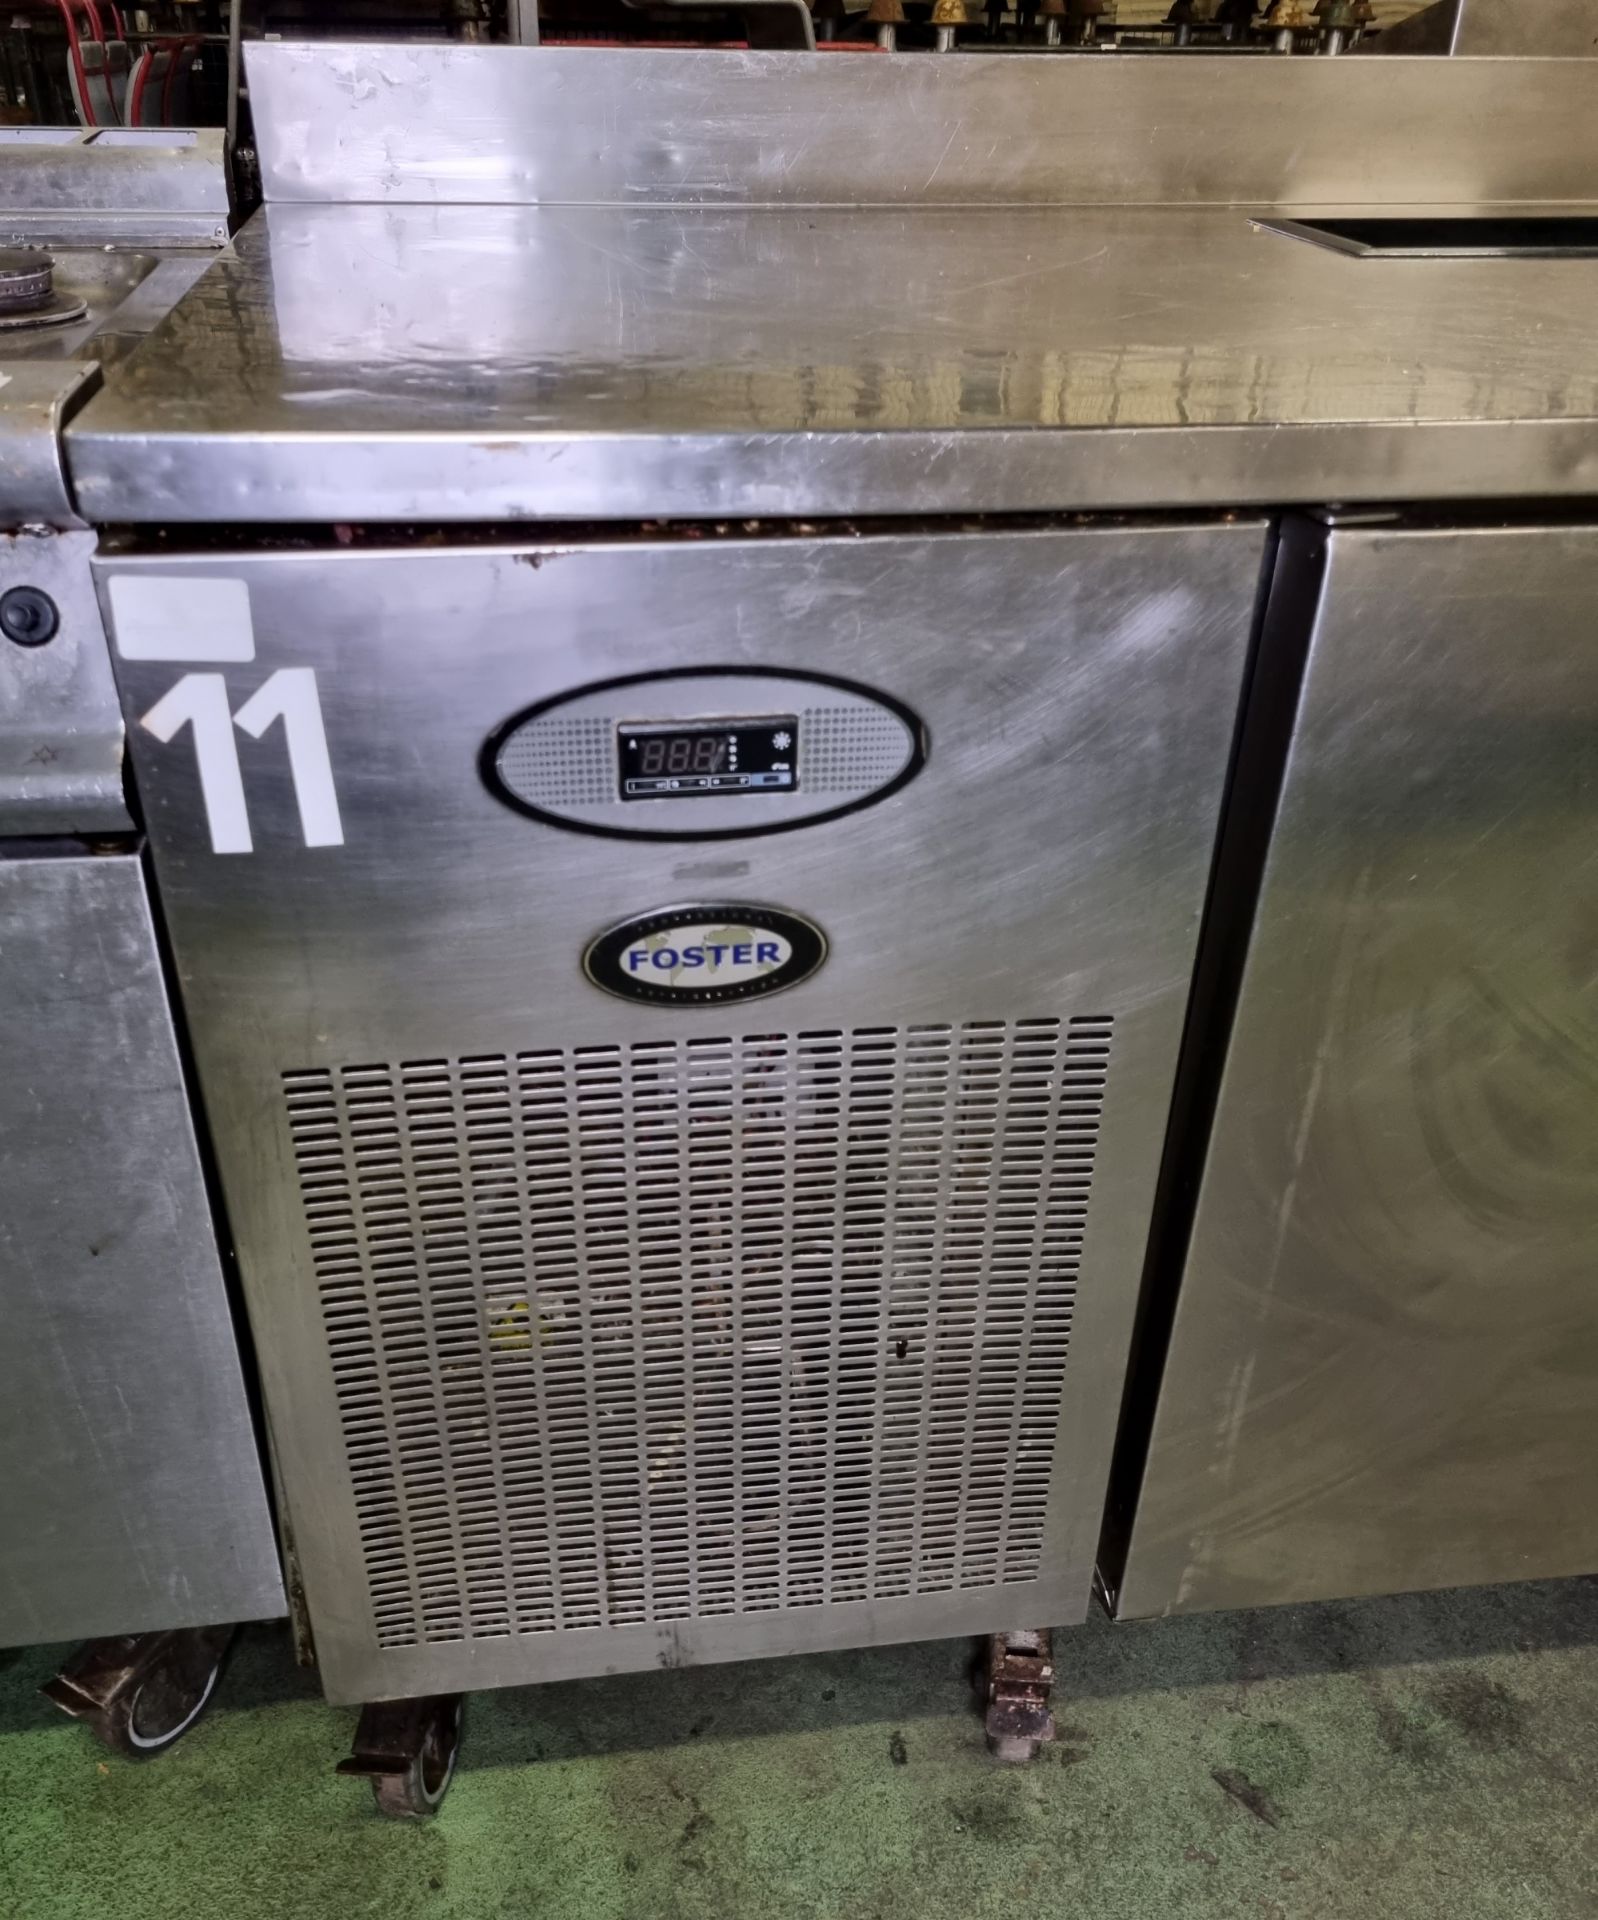 Foster Pro2/2H-A double door bench fridge - W 1540 x D 820 x H 1000 mm - Image 5 of 5